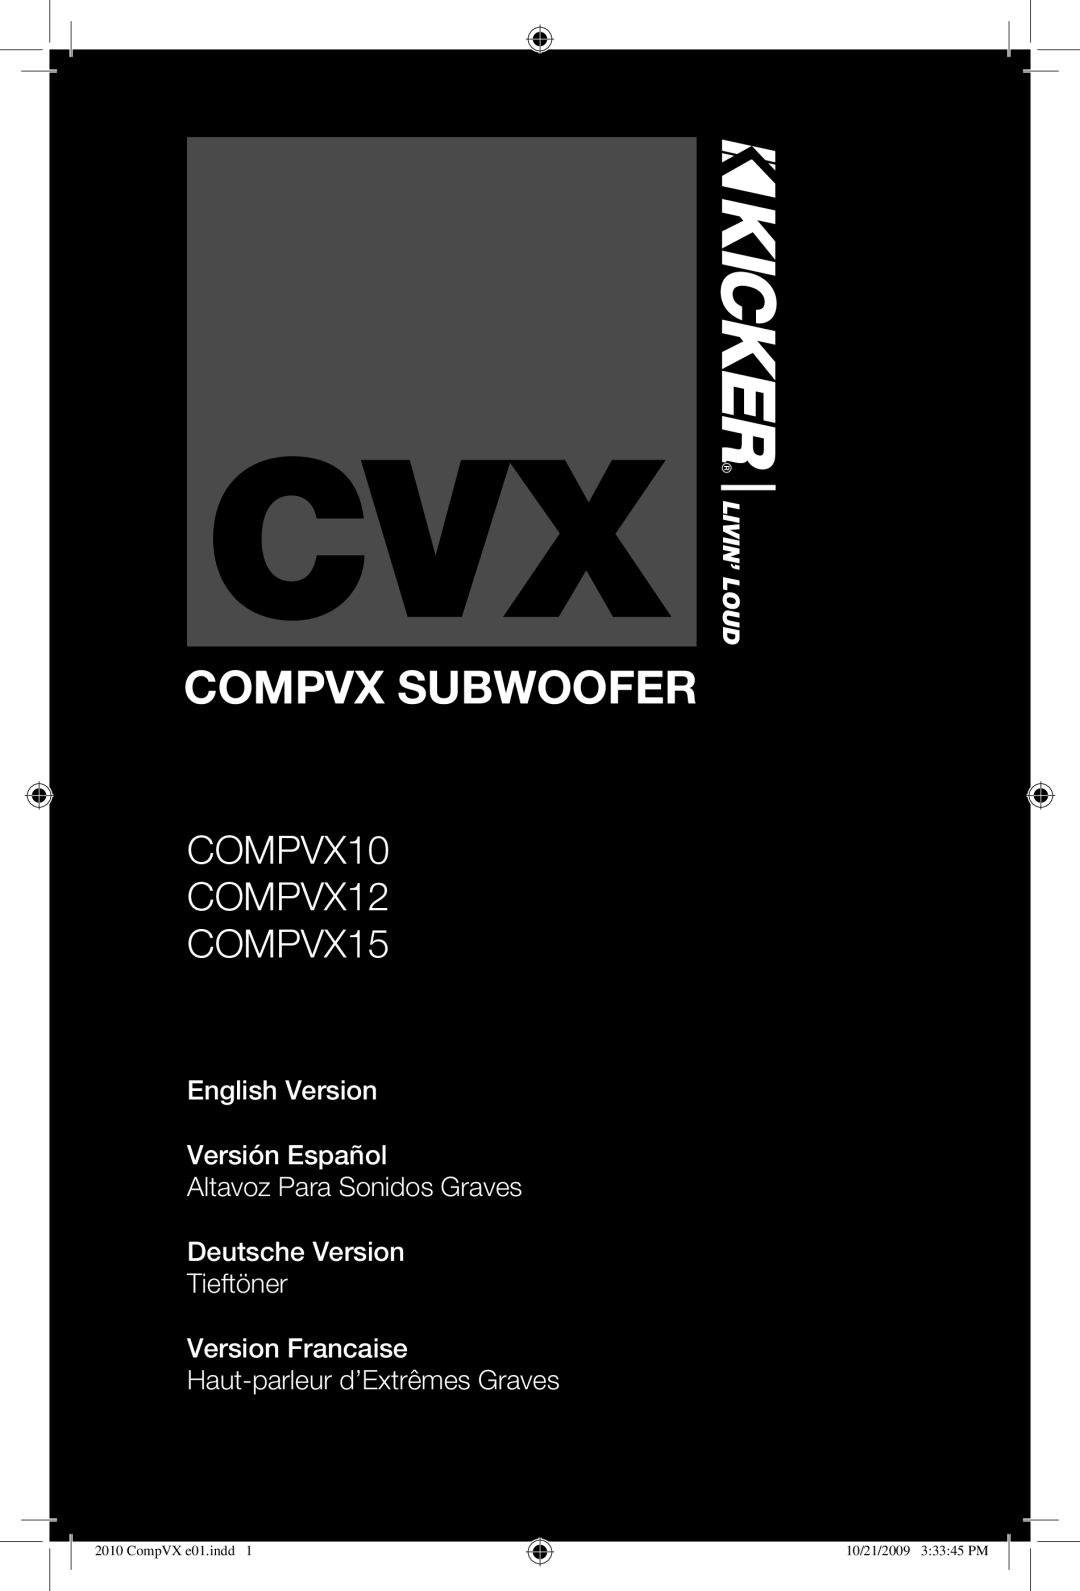 Kicker manual Compvx Subwoofer, COMPVX10 COMPVX12 COMPVX15, English Version Versión Español, Livin’ Loud 